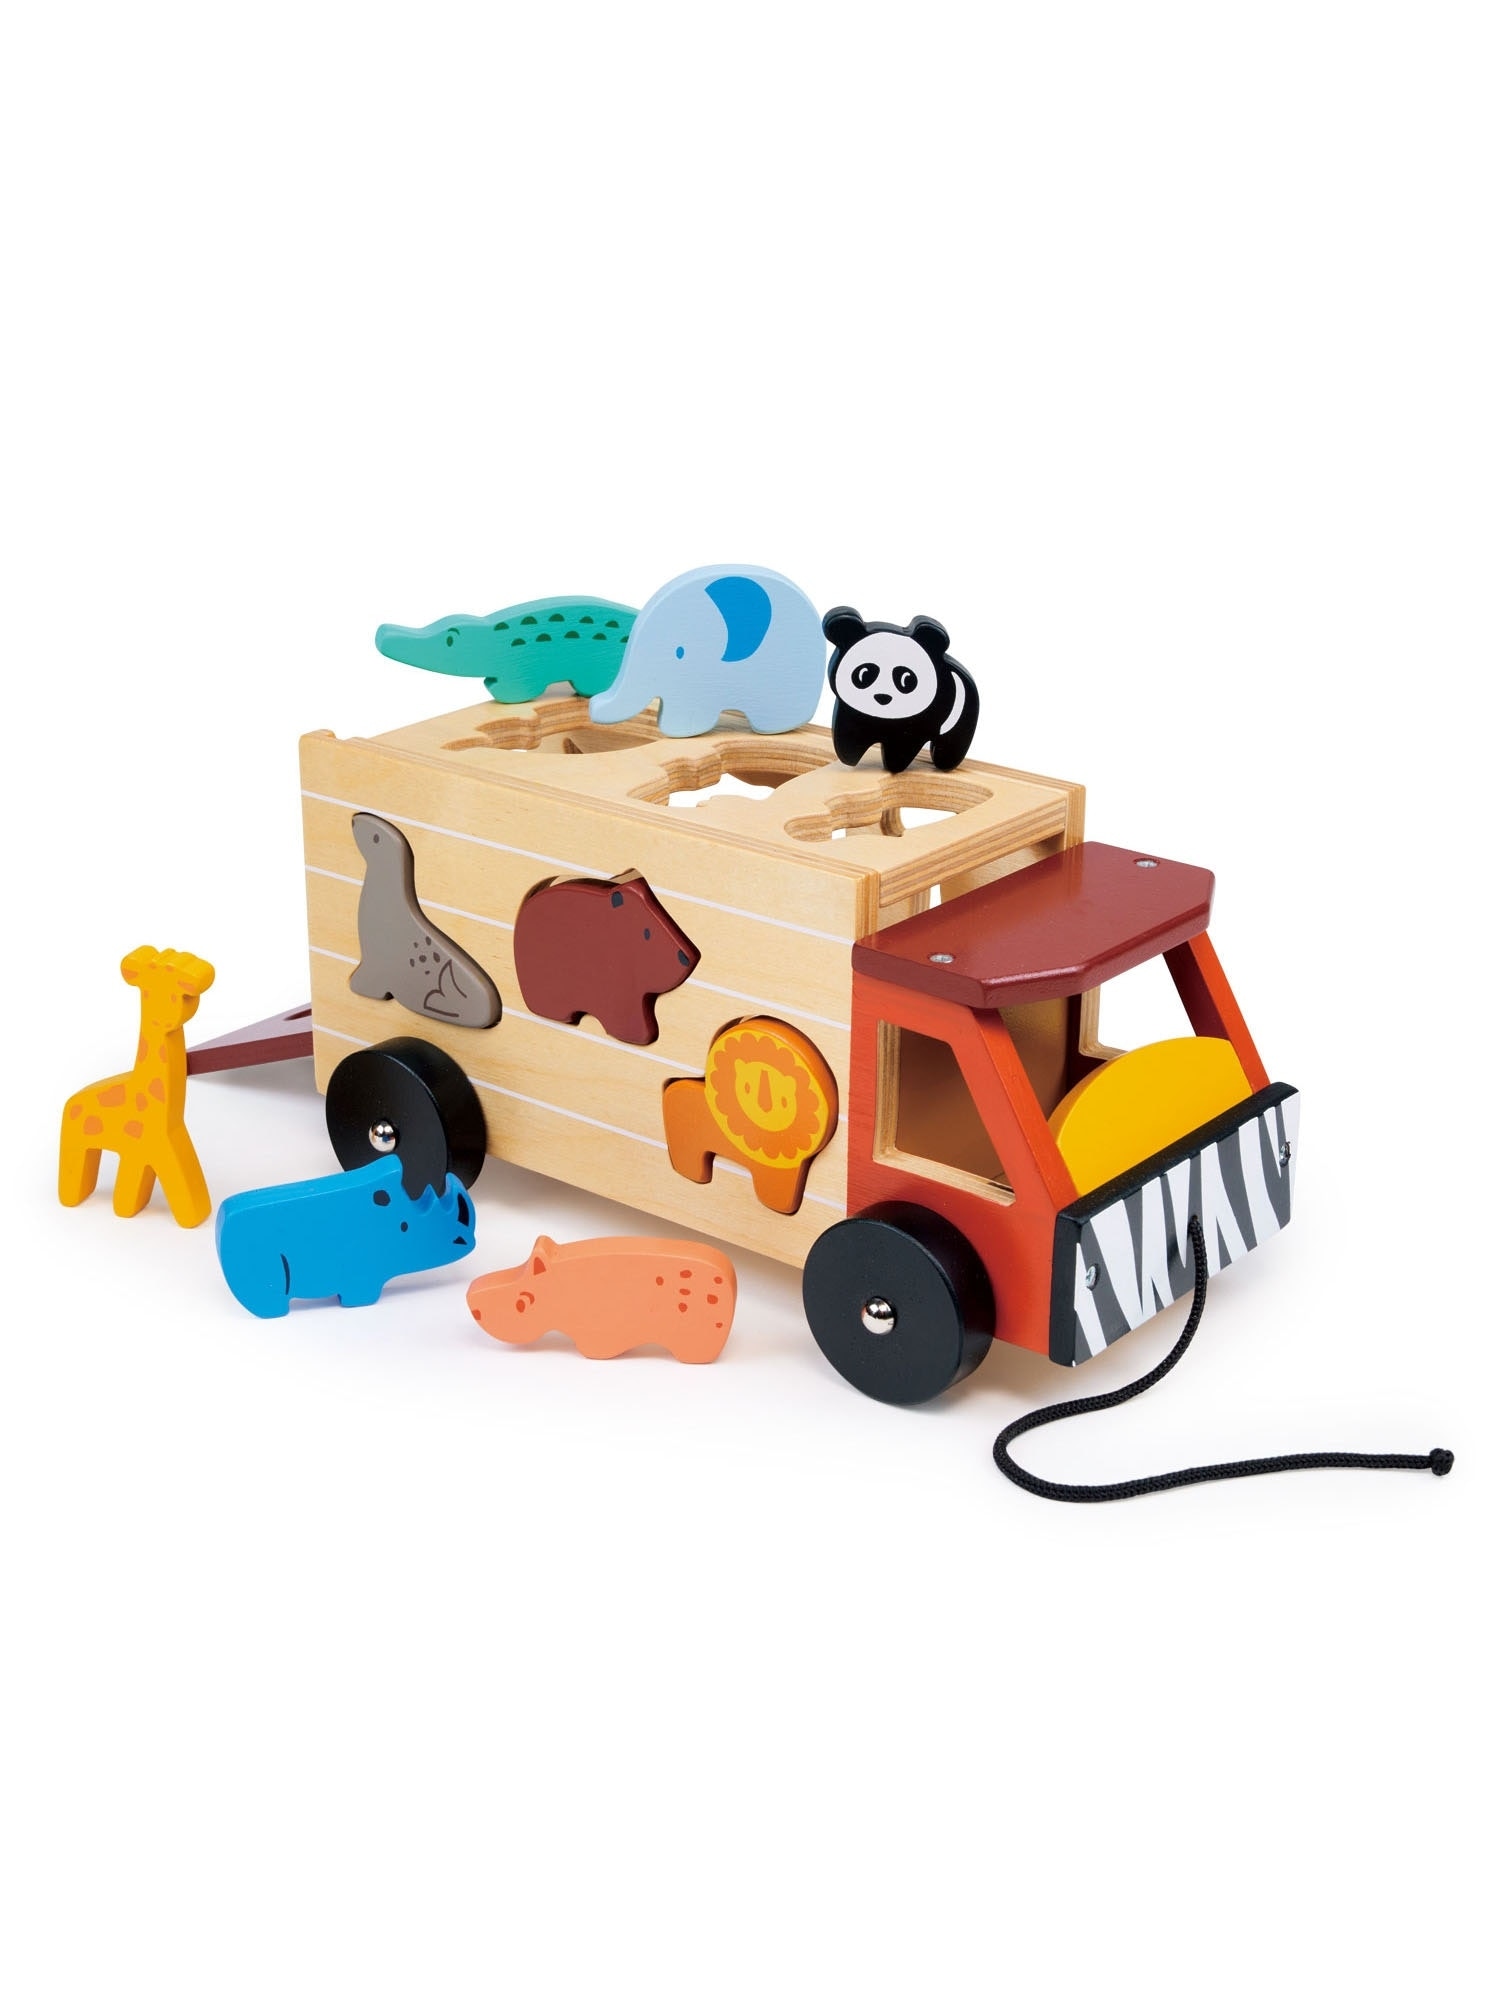 Ignite Imagination With Large Set Of Wooden Animal Figure Toys